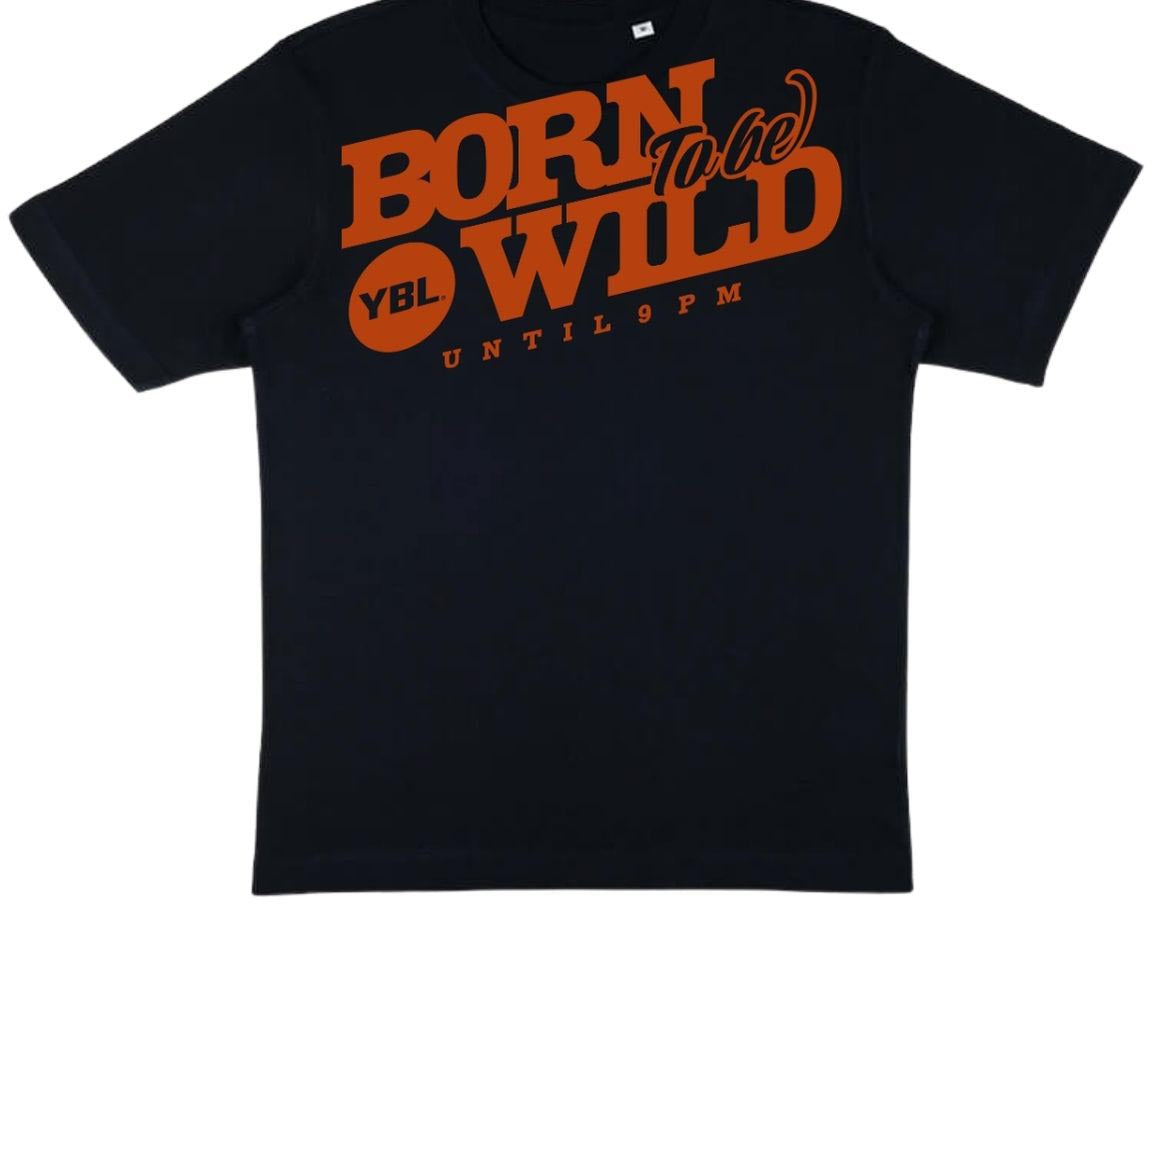 Born To Be Wild/ Free Spirit Unisex Oversized Tee in Black